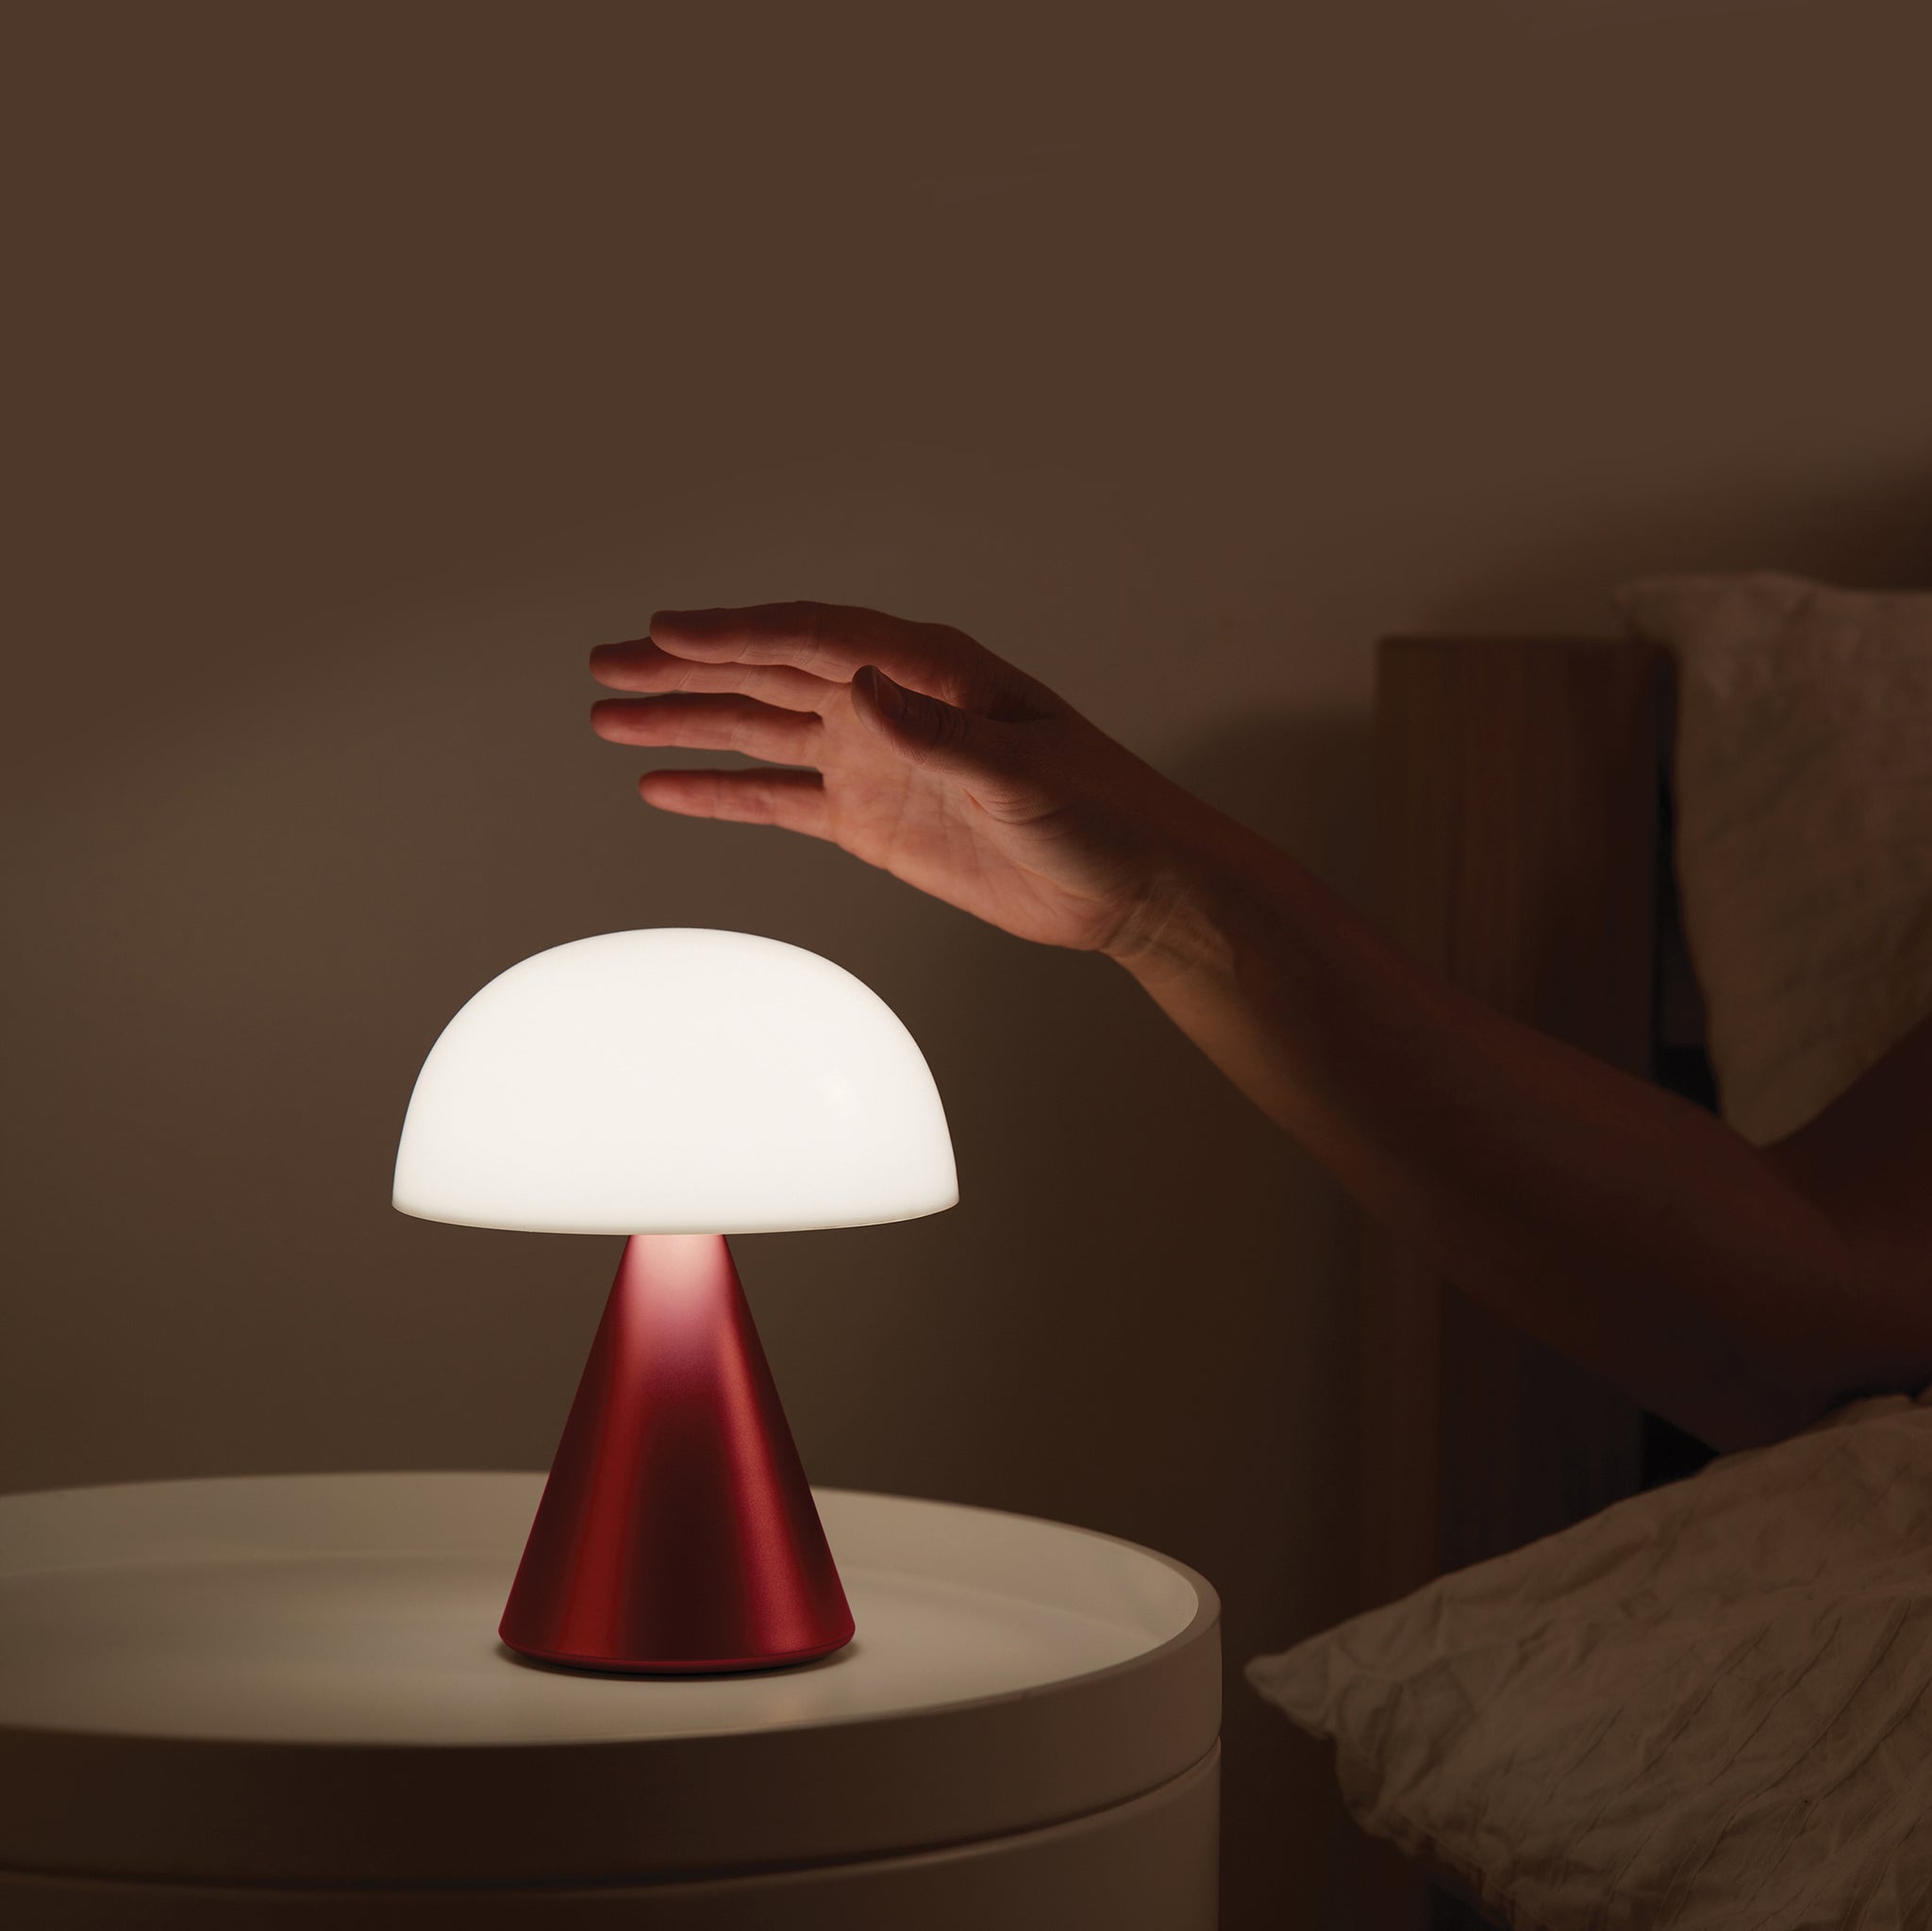 Lexon Mina Large Oplaadbare Tafellamp Donkerrood│art. LH65DR│naast bed op nachtkastje met hand boven licht